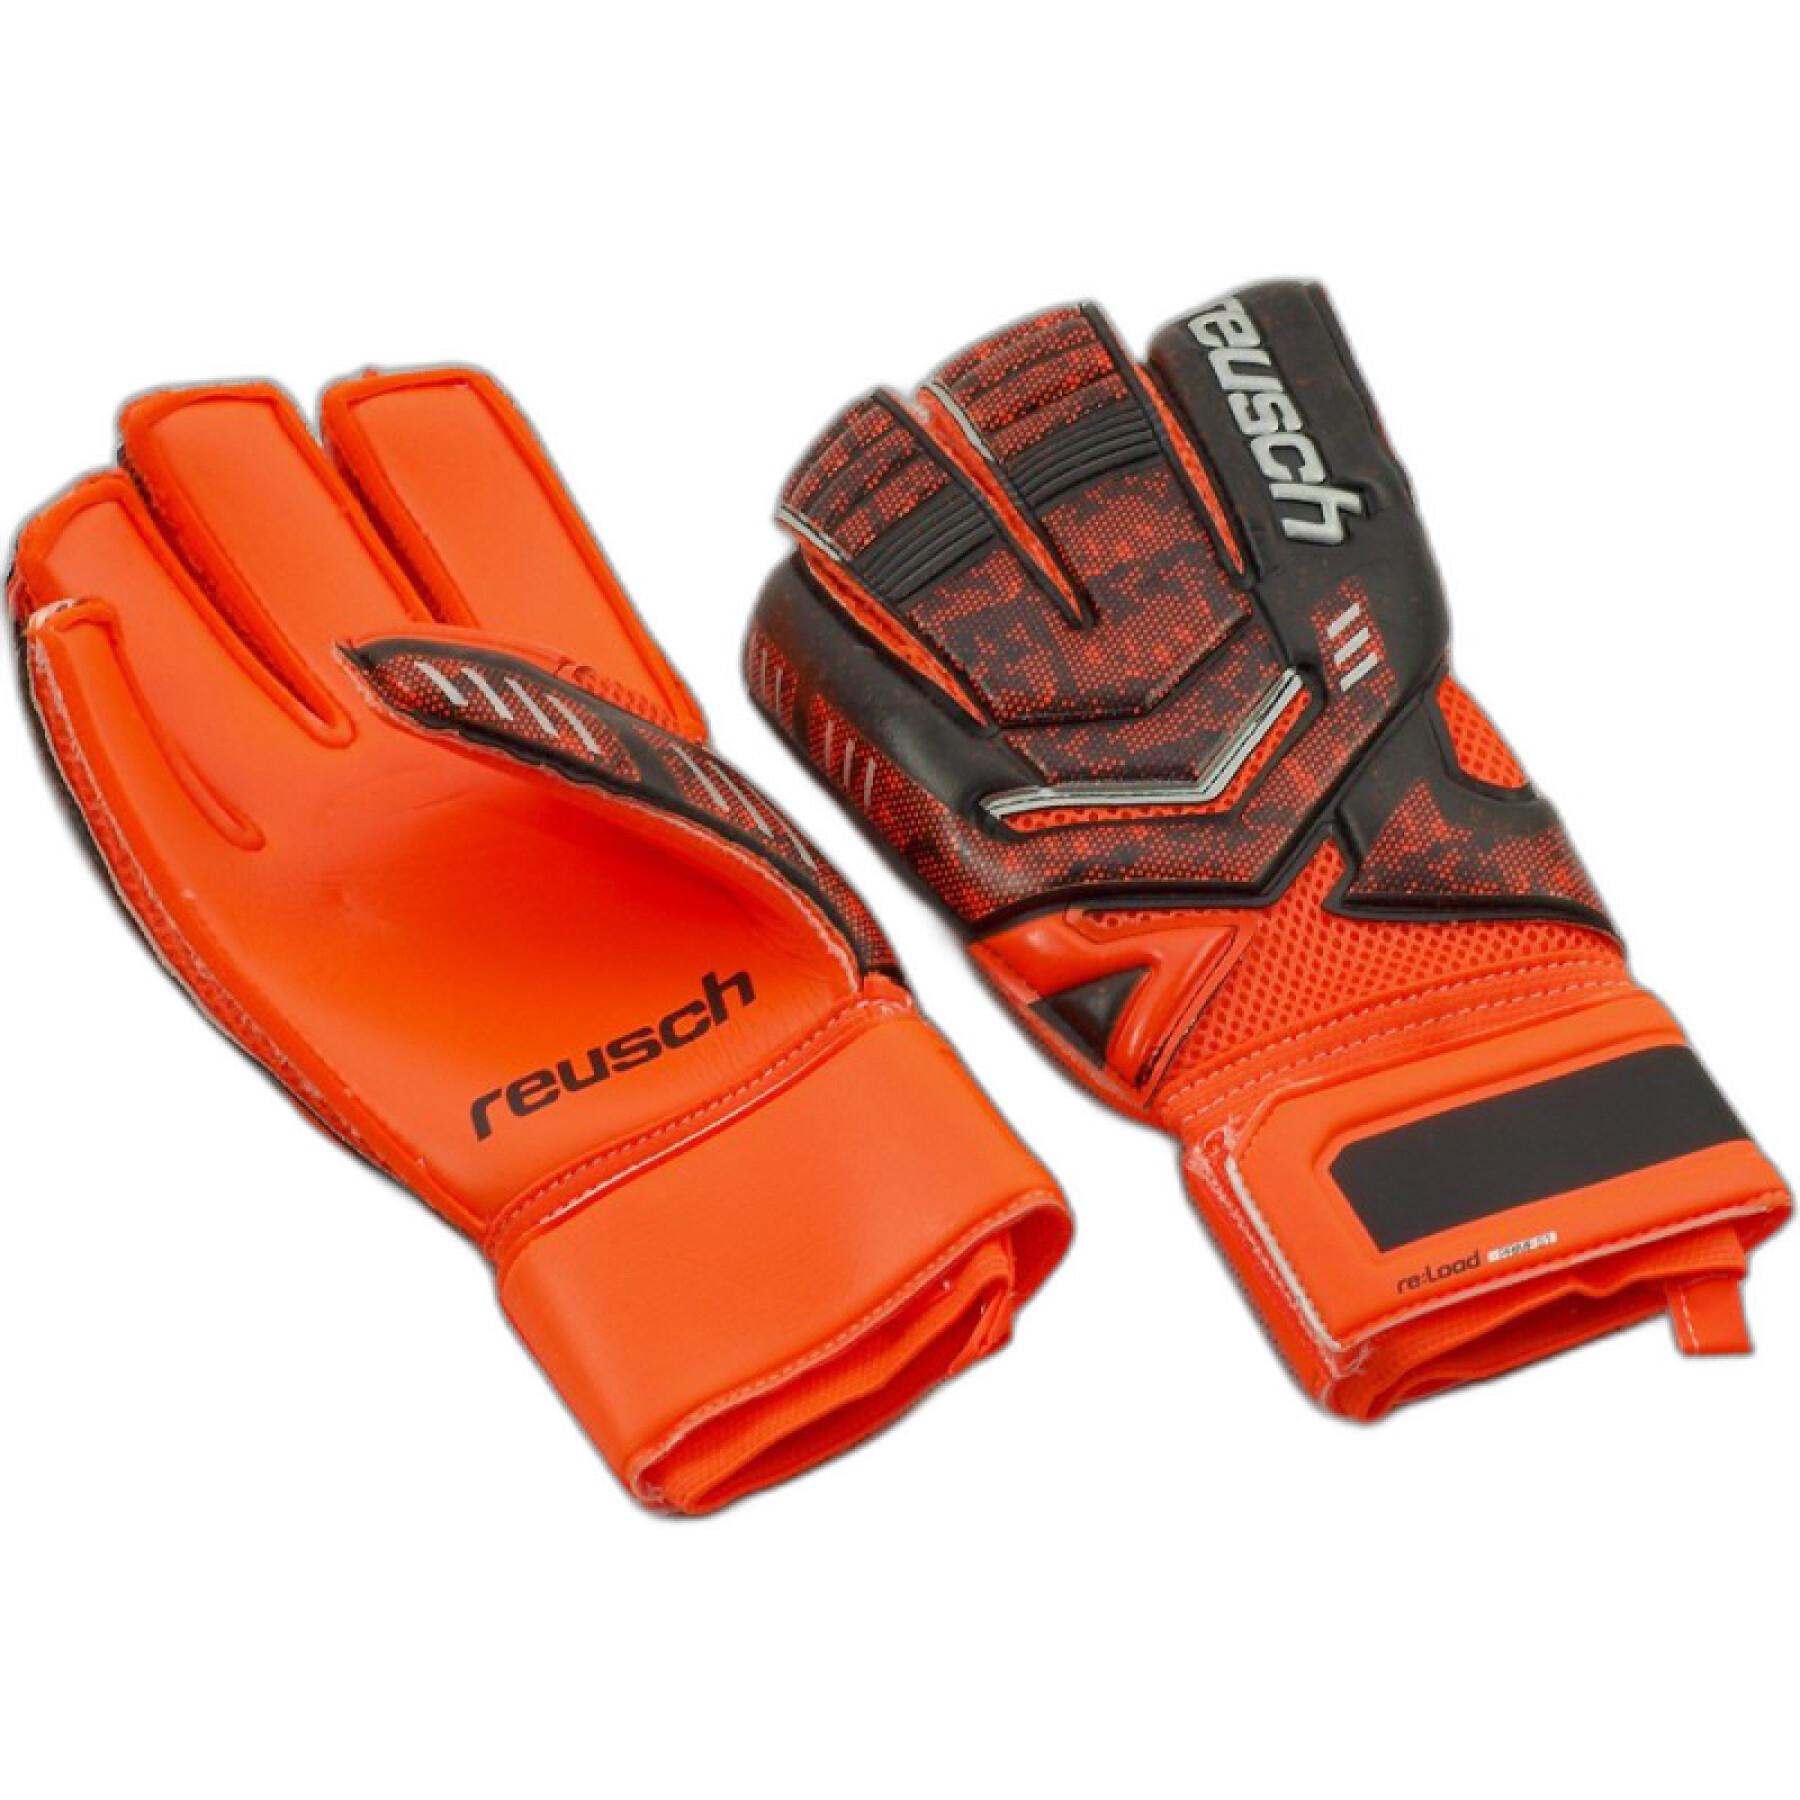 Goalkeeper gloves Reusch Re:load Prime S1